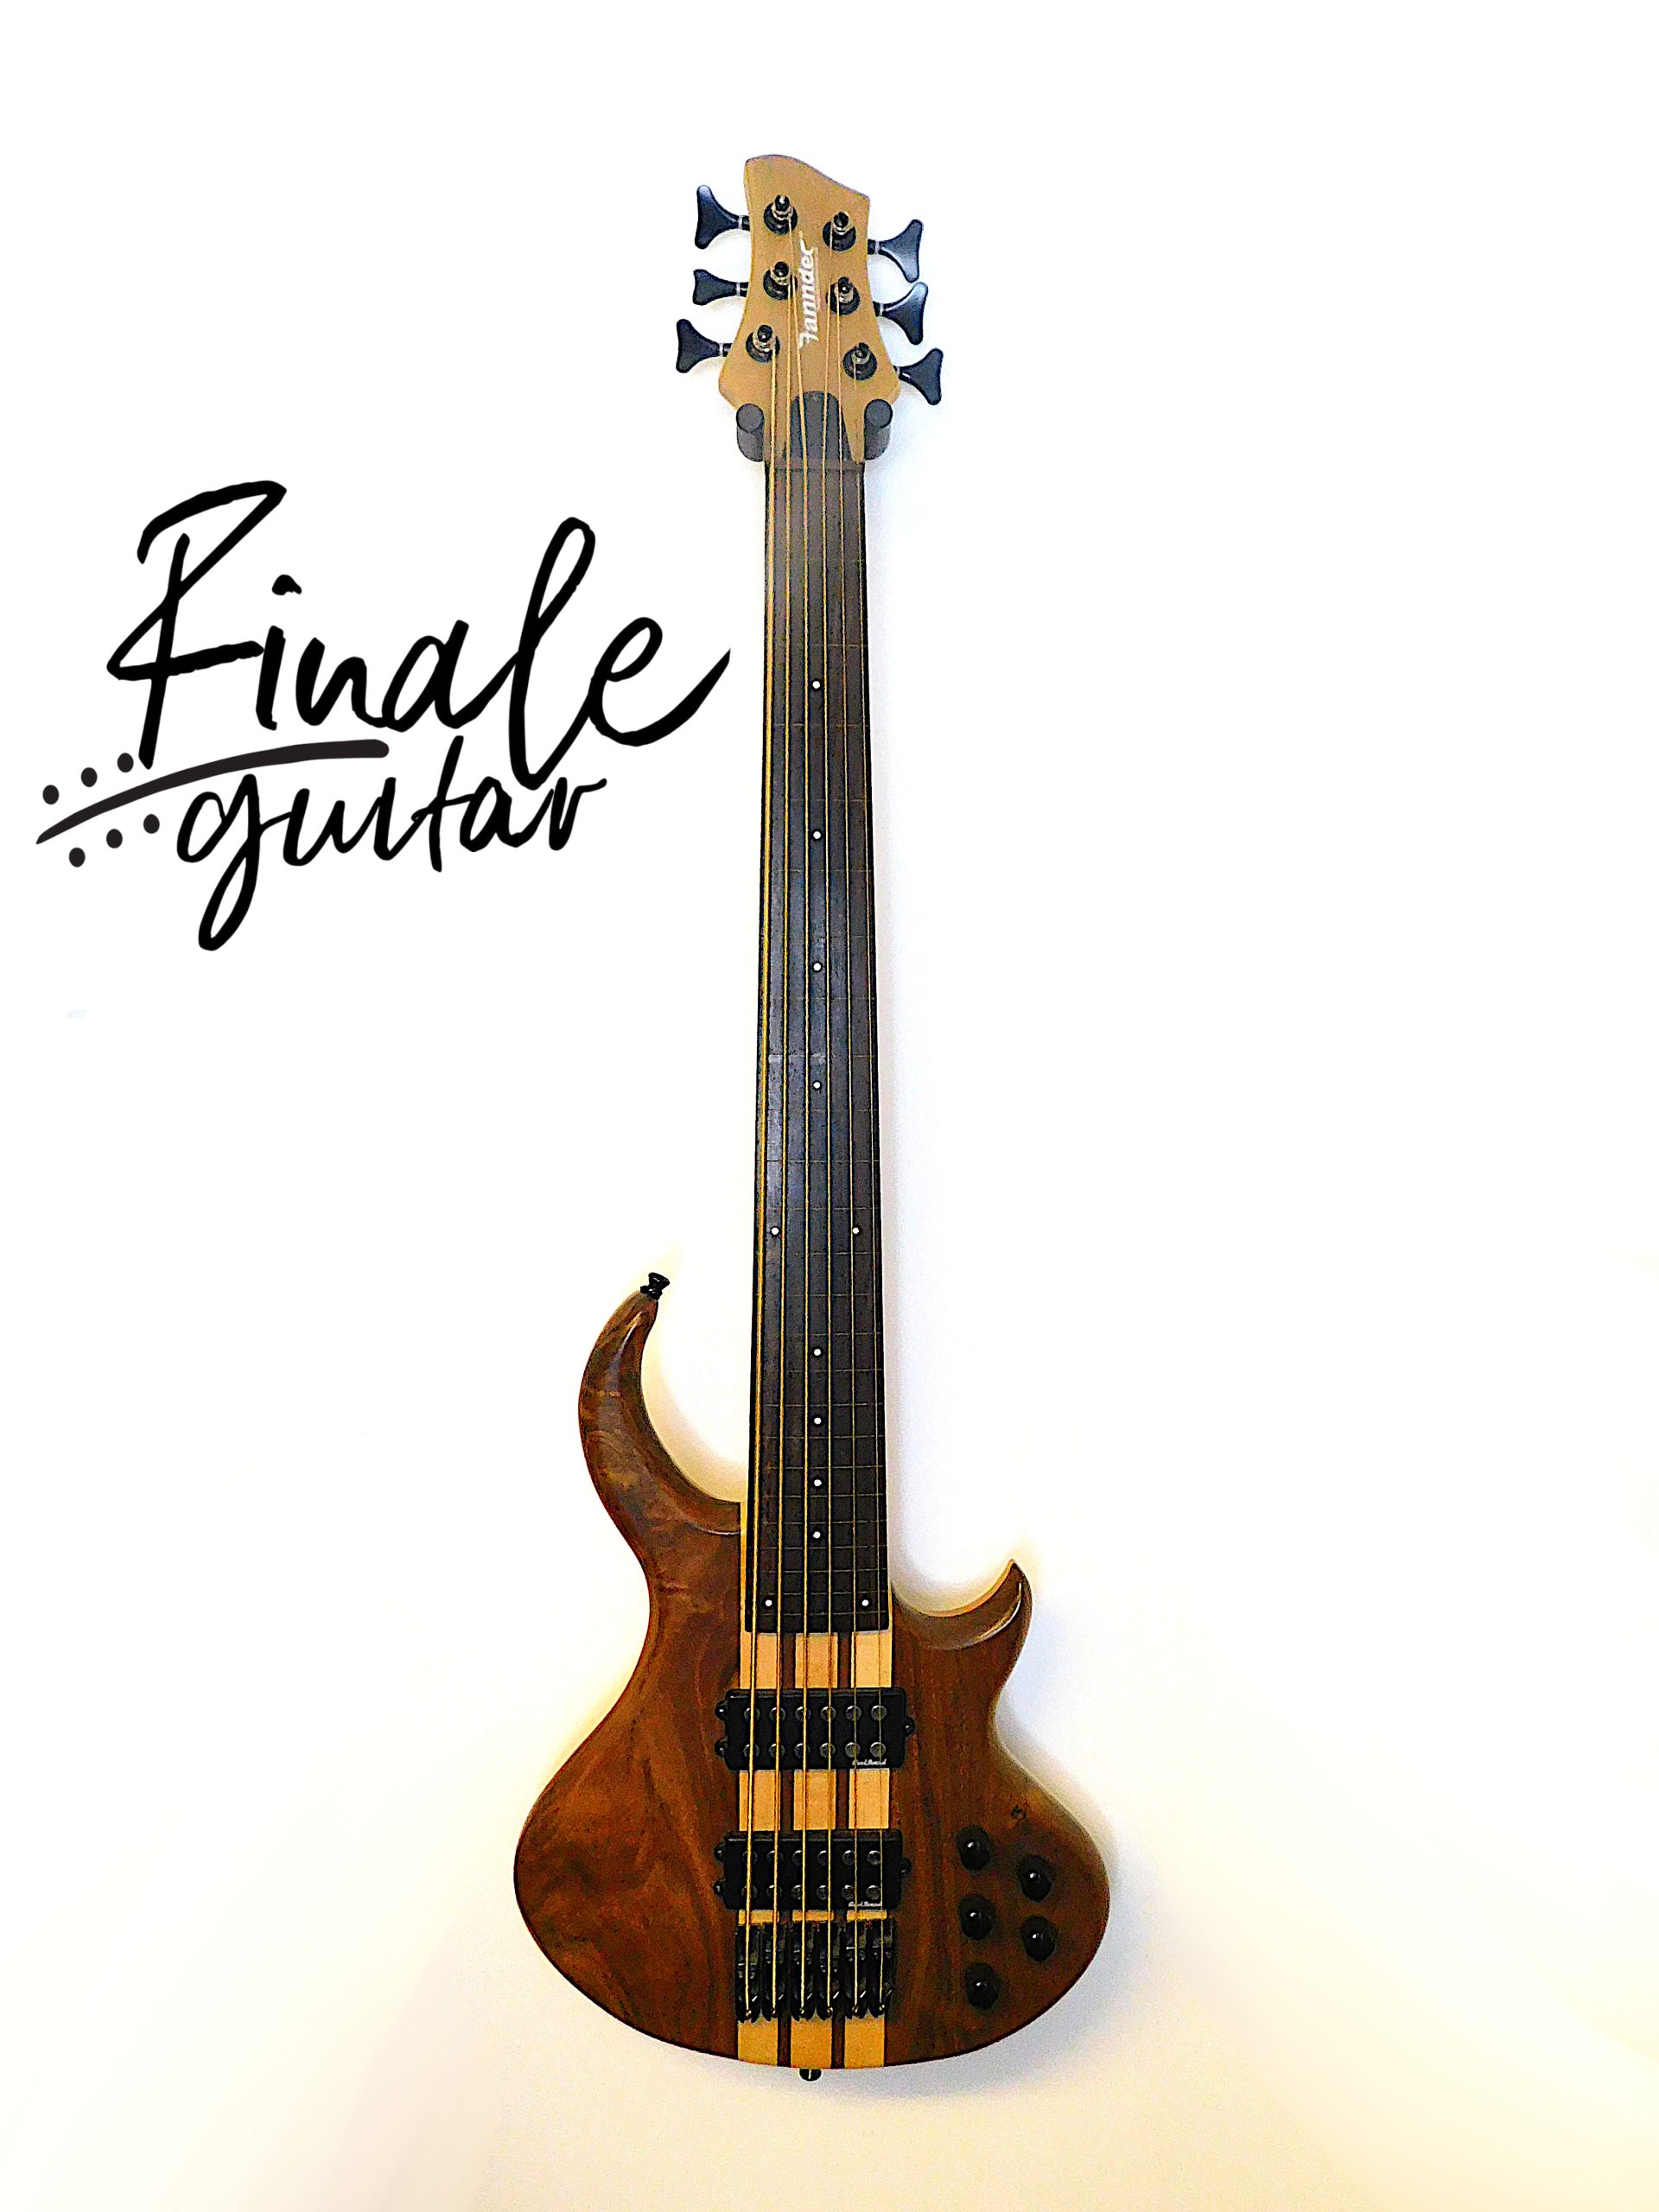 Fanndec 6 string fretless bass for sale in our Sheffield guitar shop, Finale Guitar